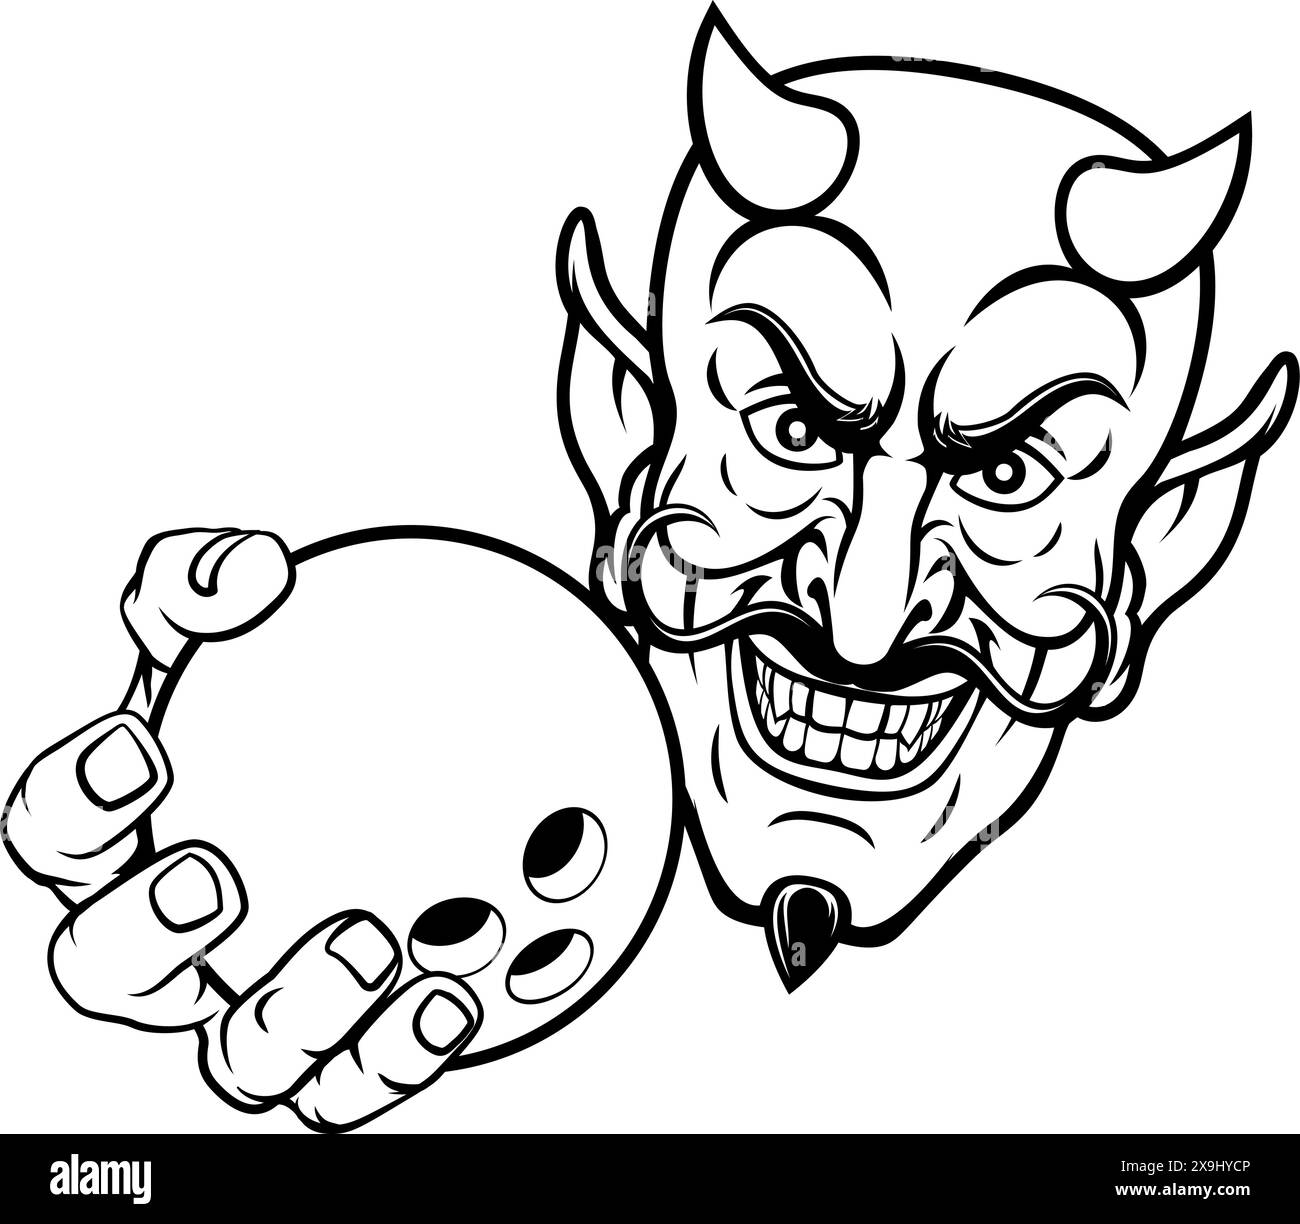 Devil Ten Pin Bowling Ball Sports Mascot Cartoon Stock Vector